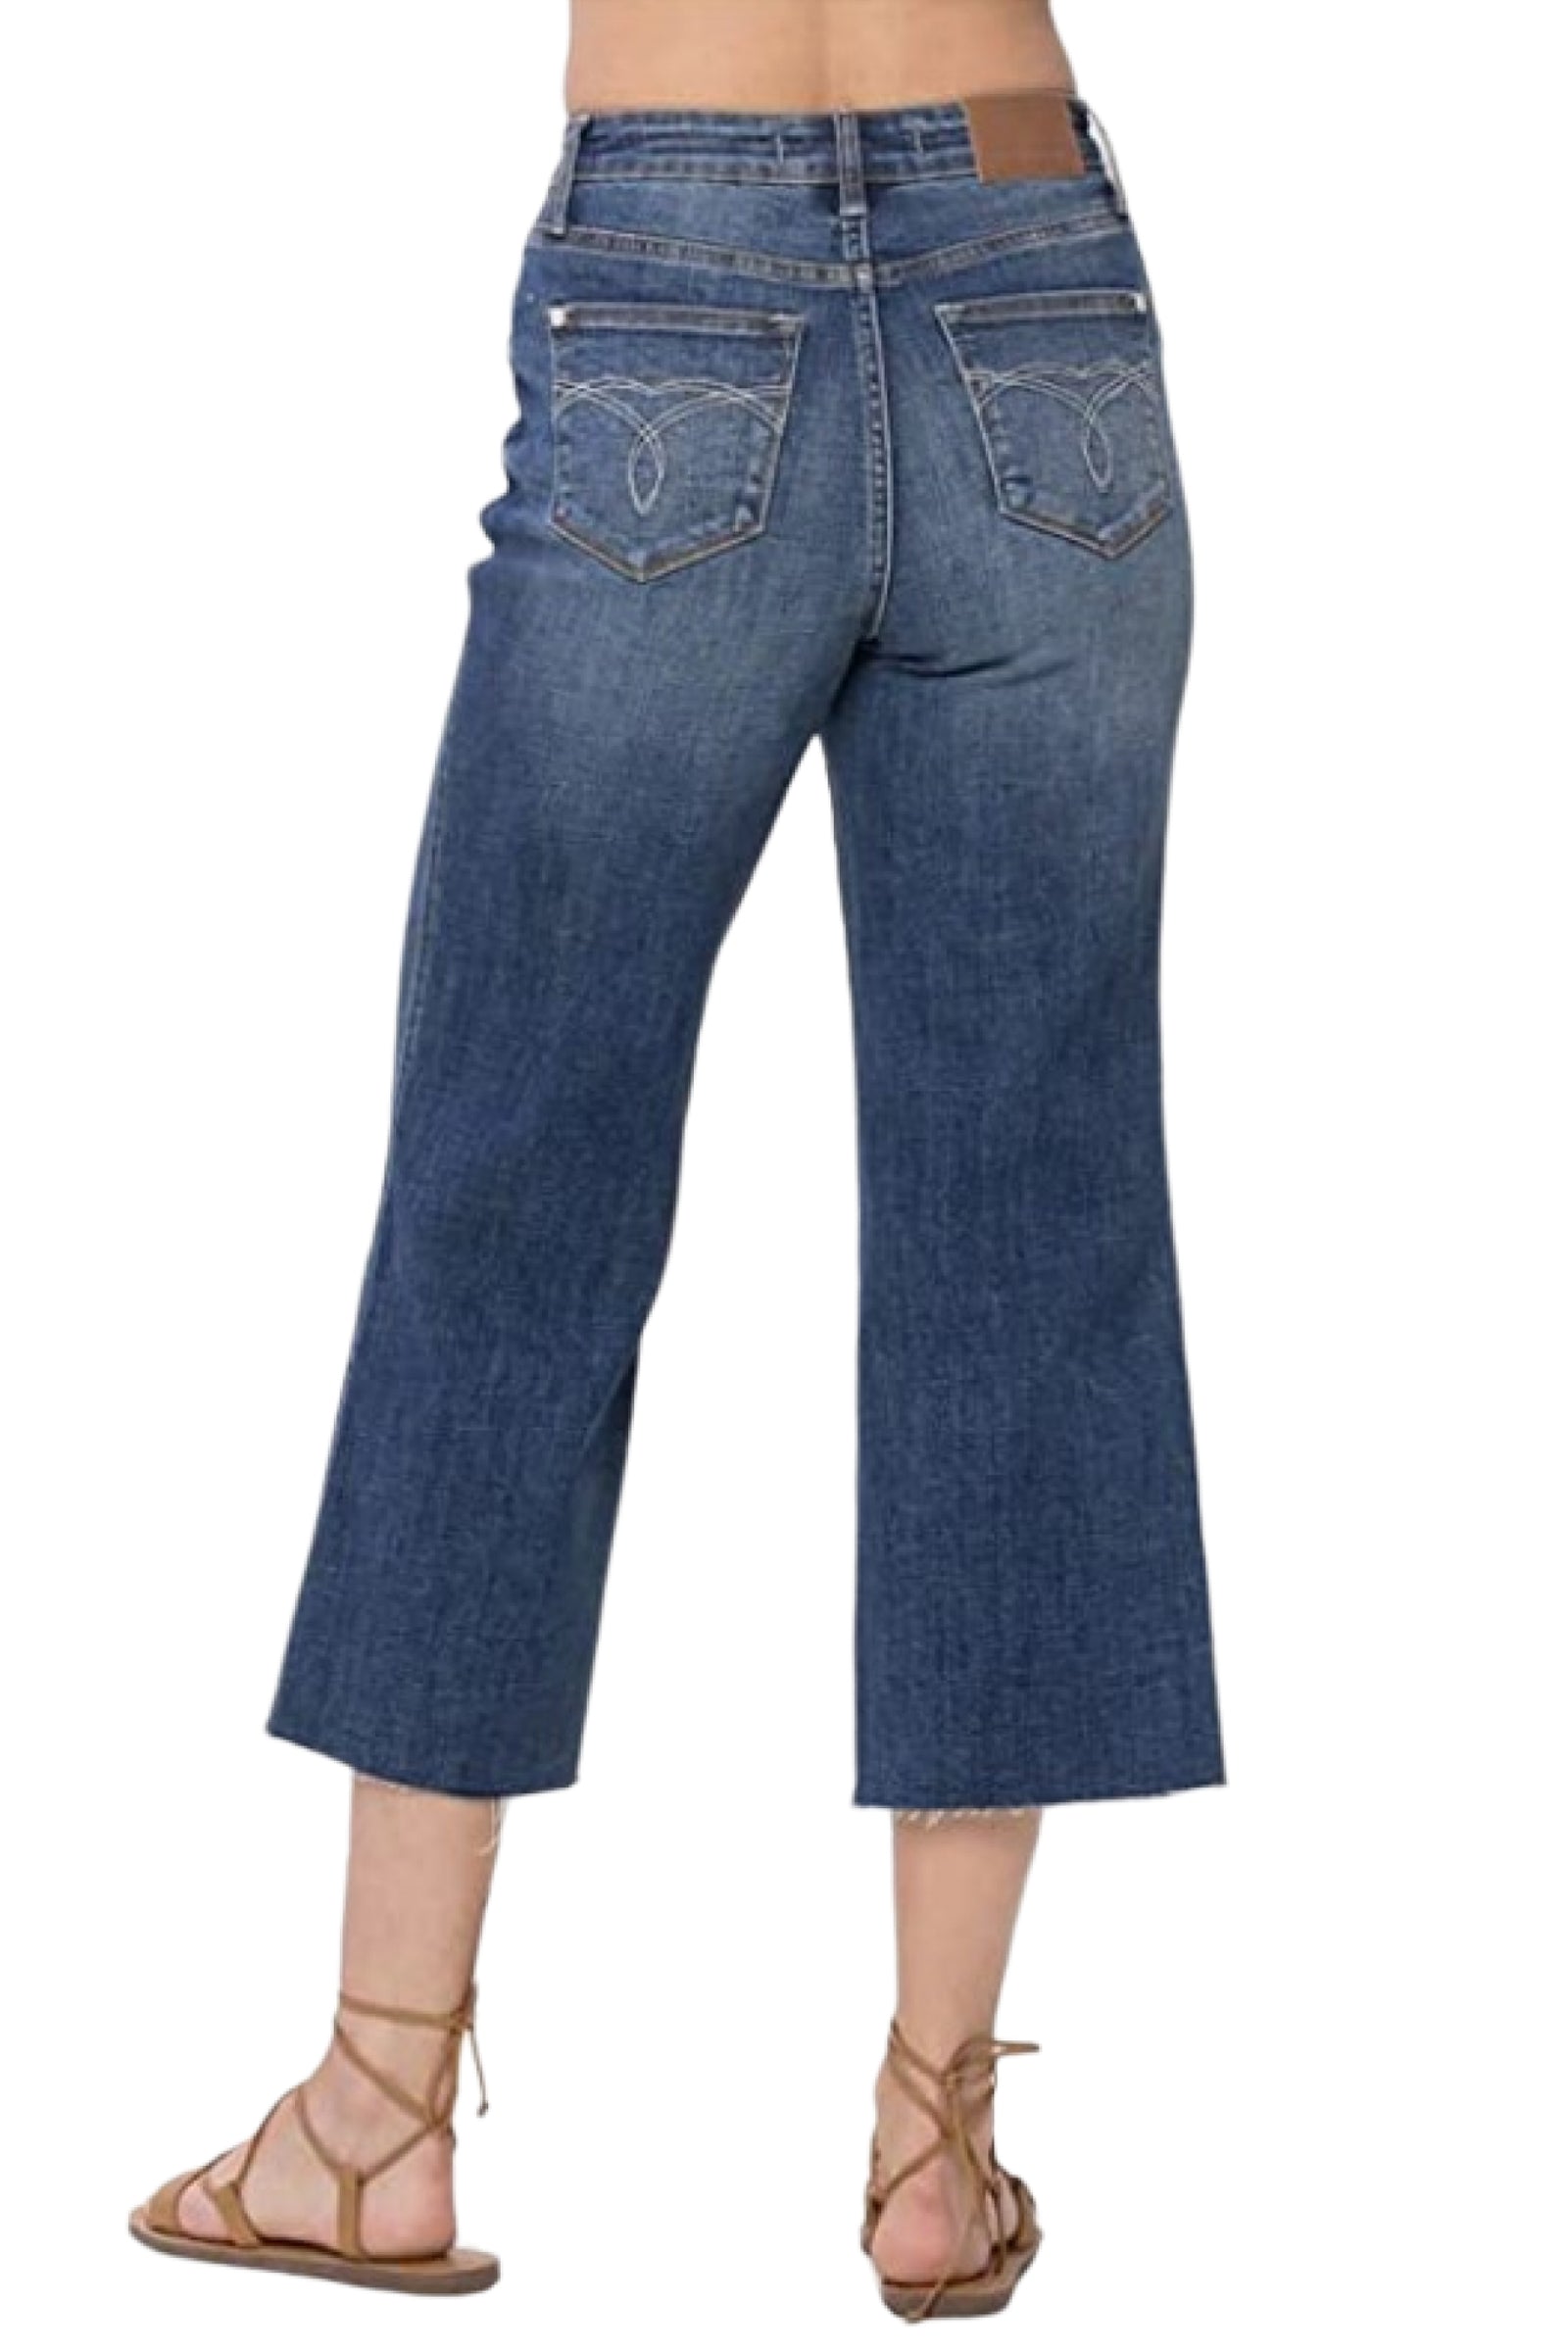 Back View, Judy Blue High Waist Pocket Embroidery Crop Wide Leg Jeans, 88612